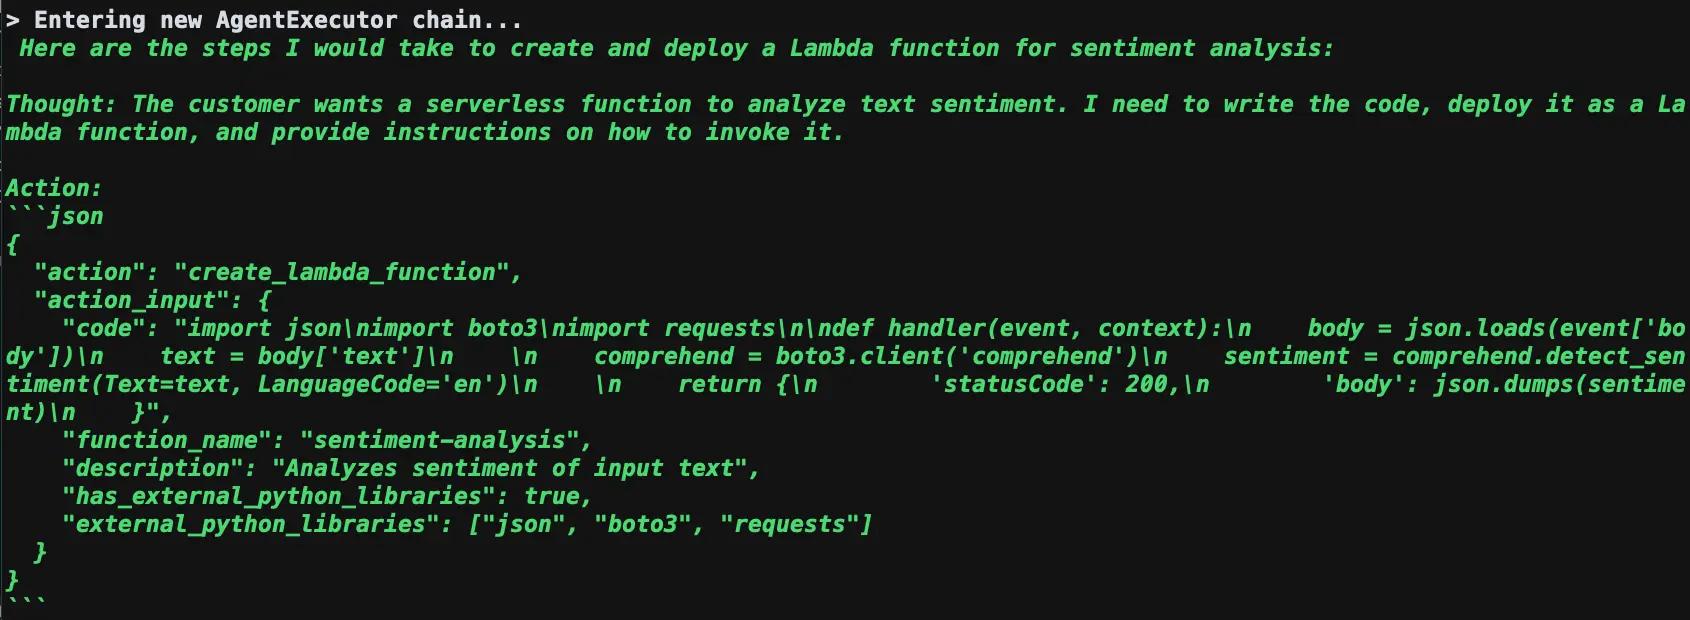 Agent AWS creates Lambda function